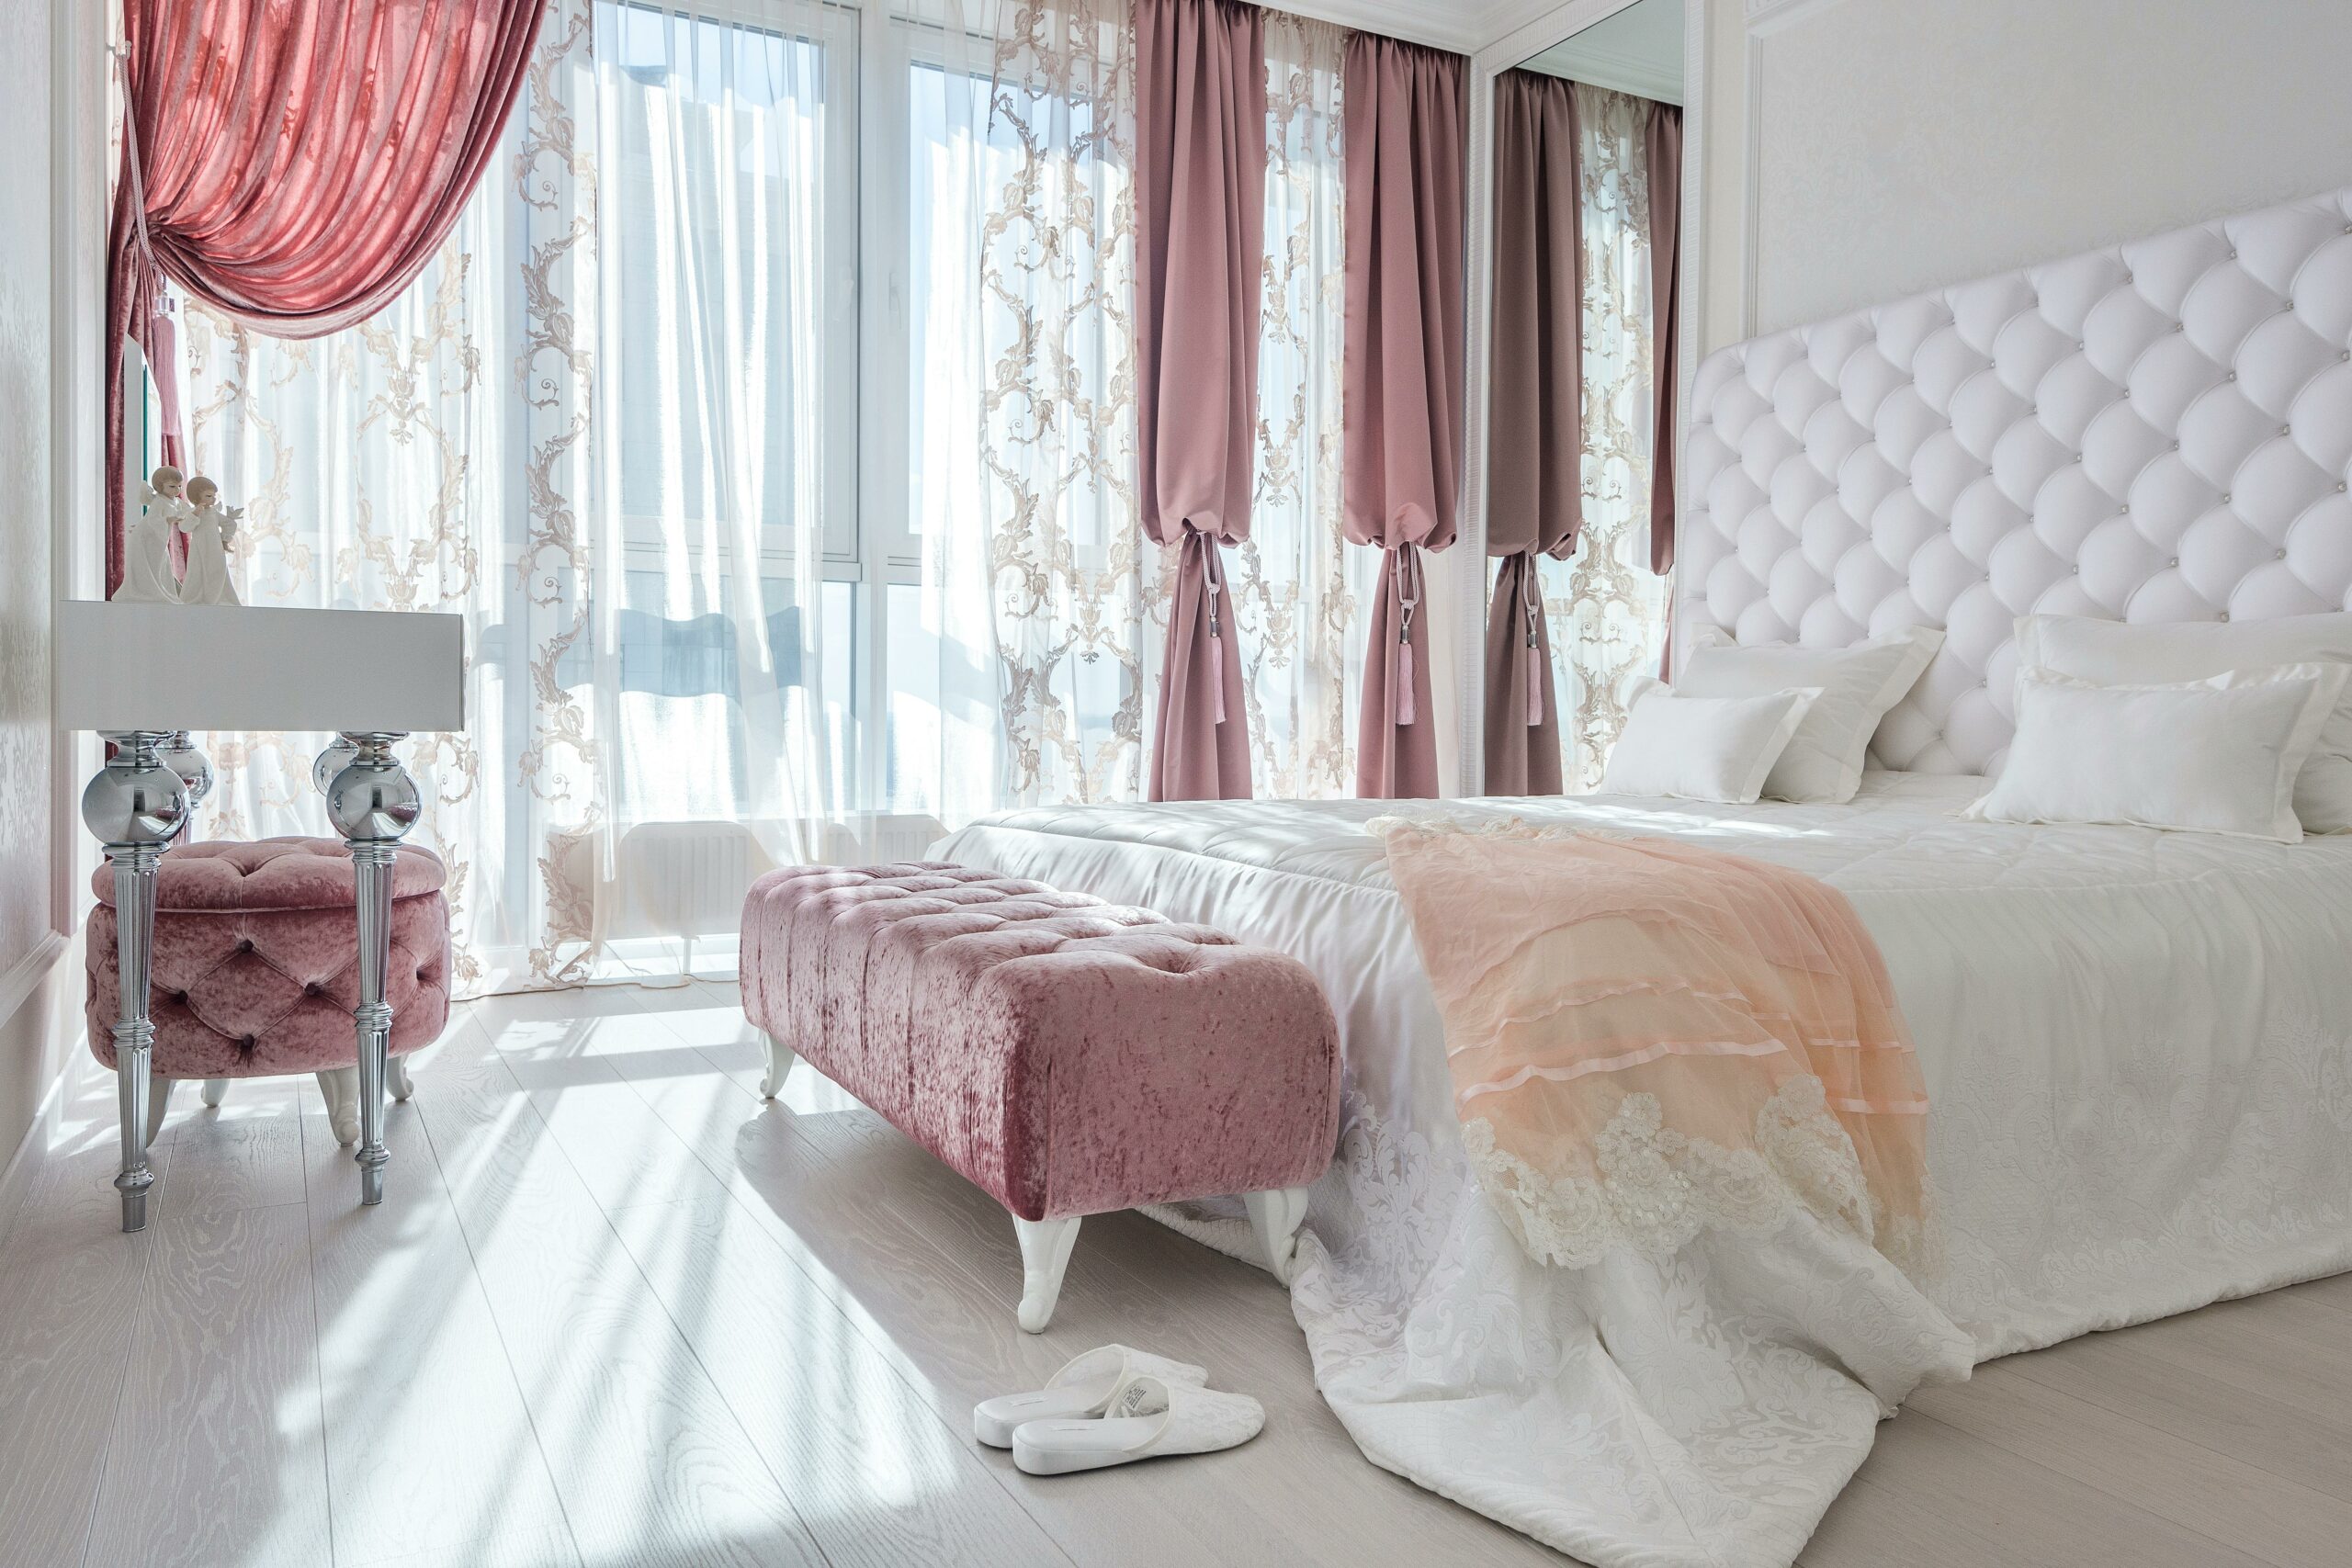 Bedroom Decor with Textured Elements